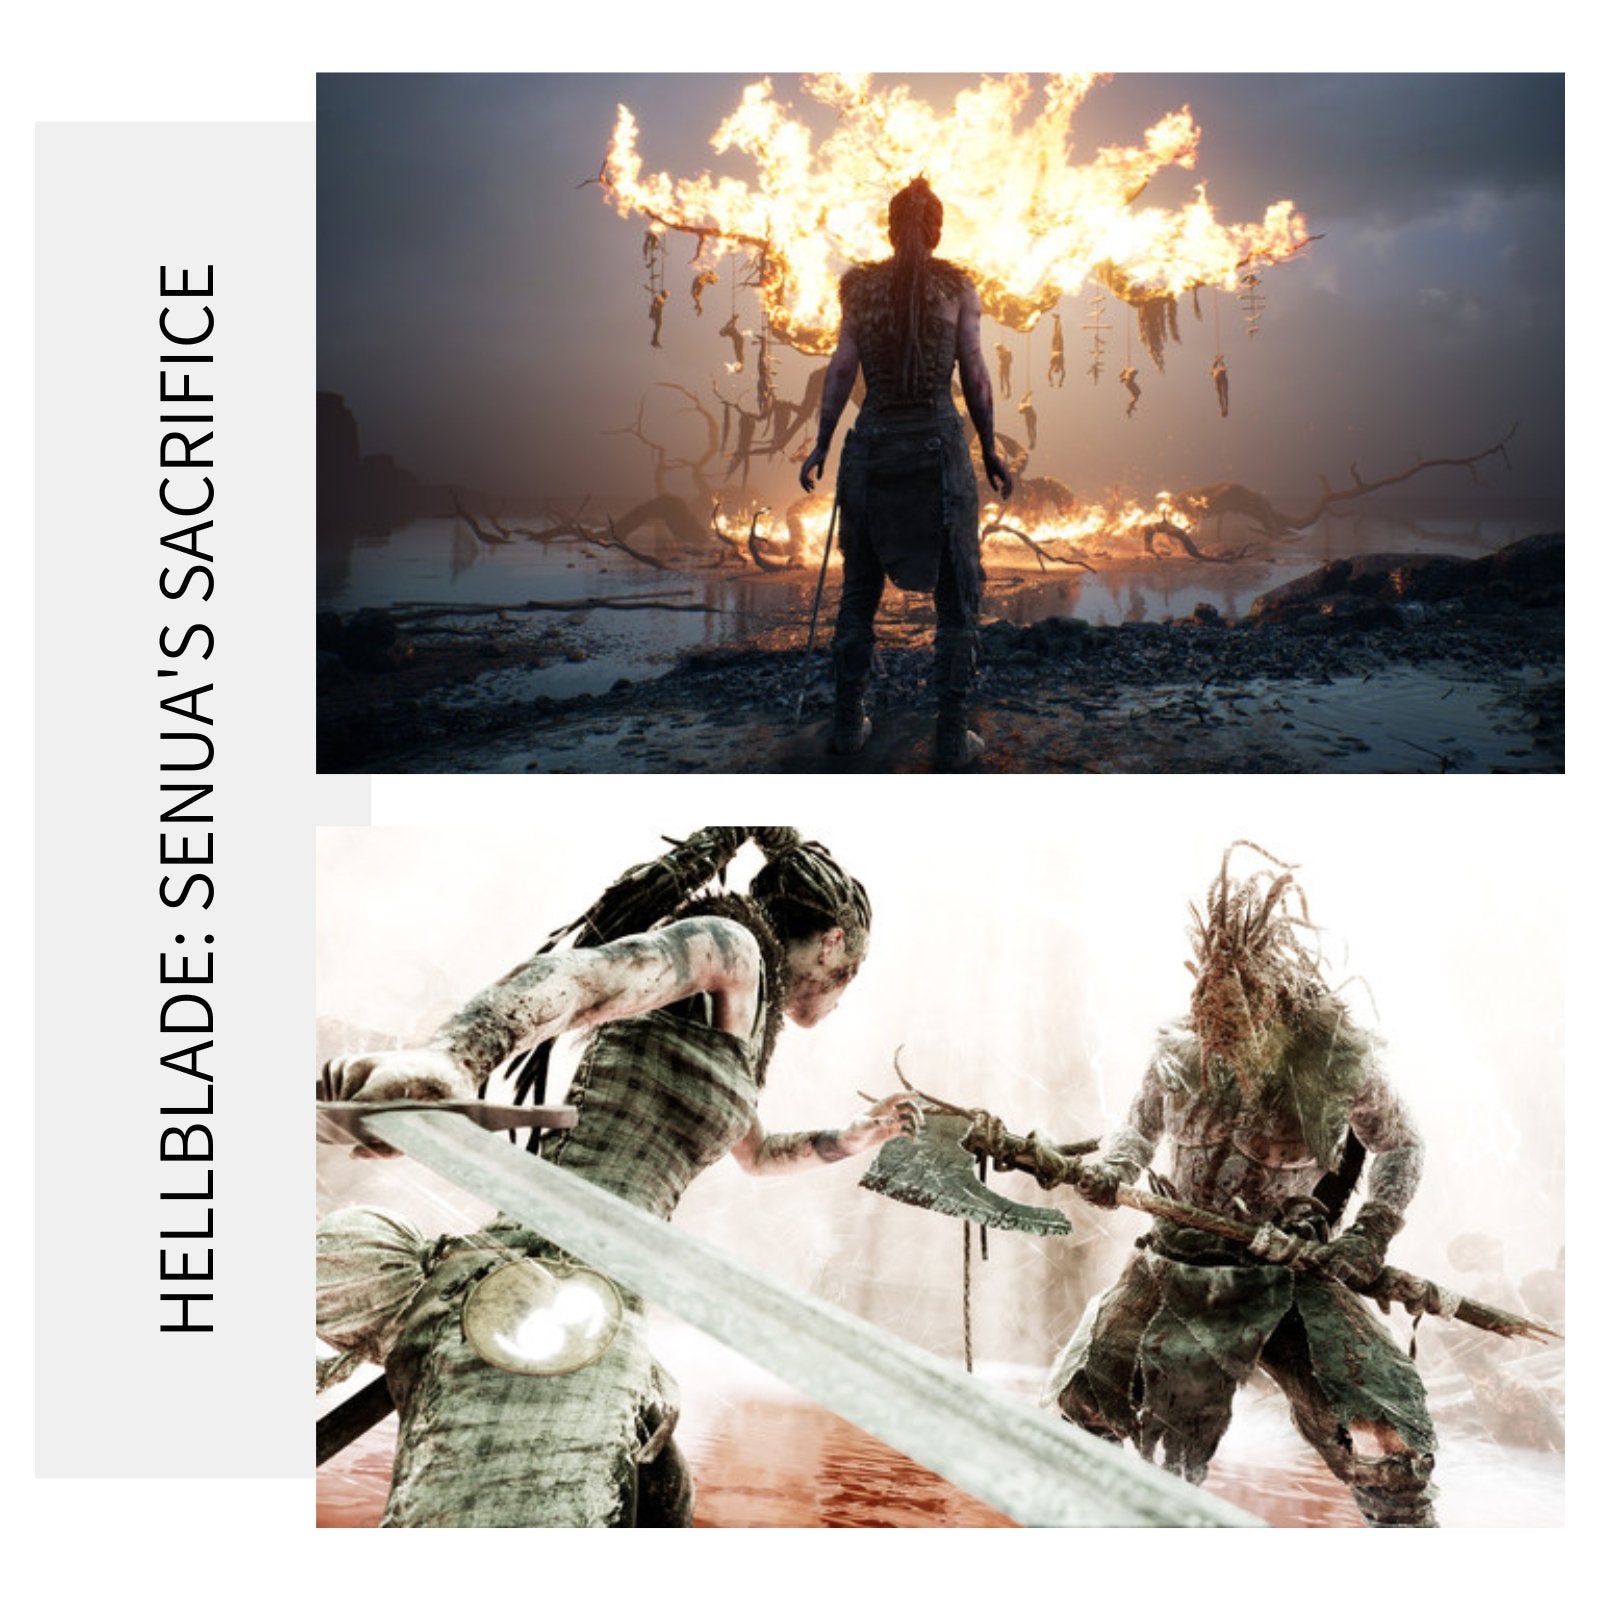 Hellblade: Senua's Sacrifice | PC Game Steam Key - Killonyi